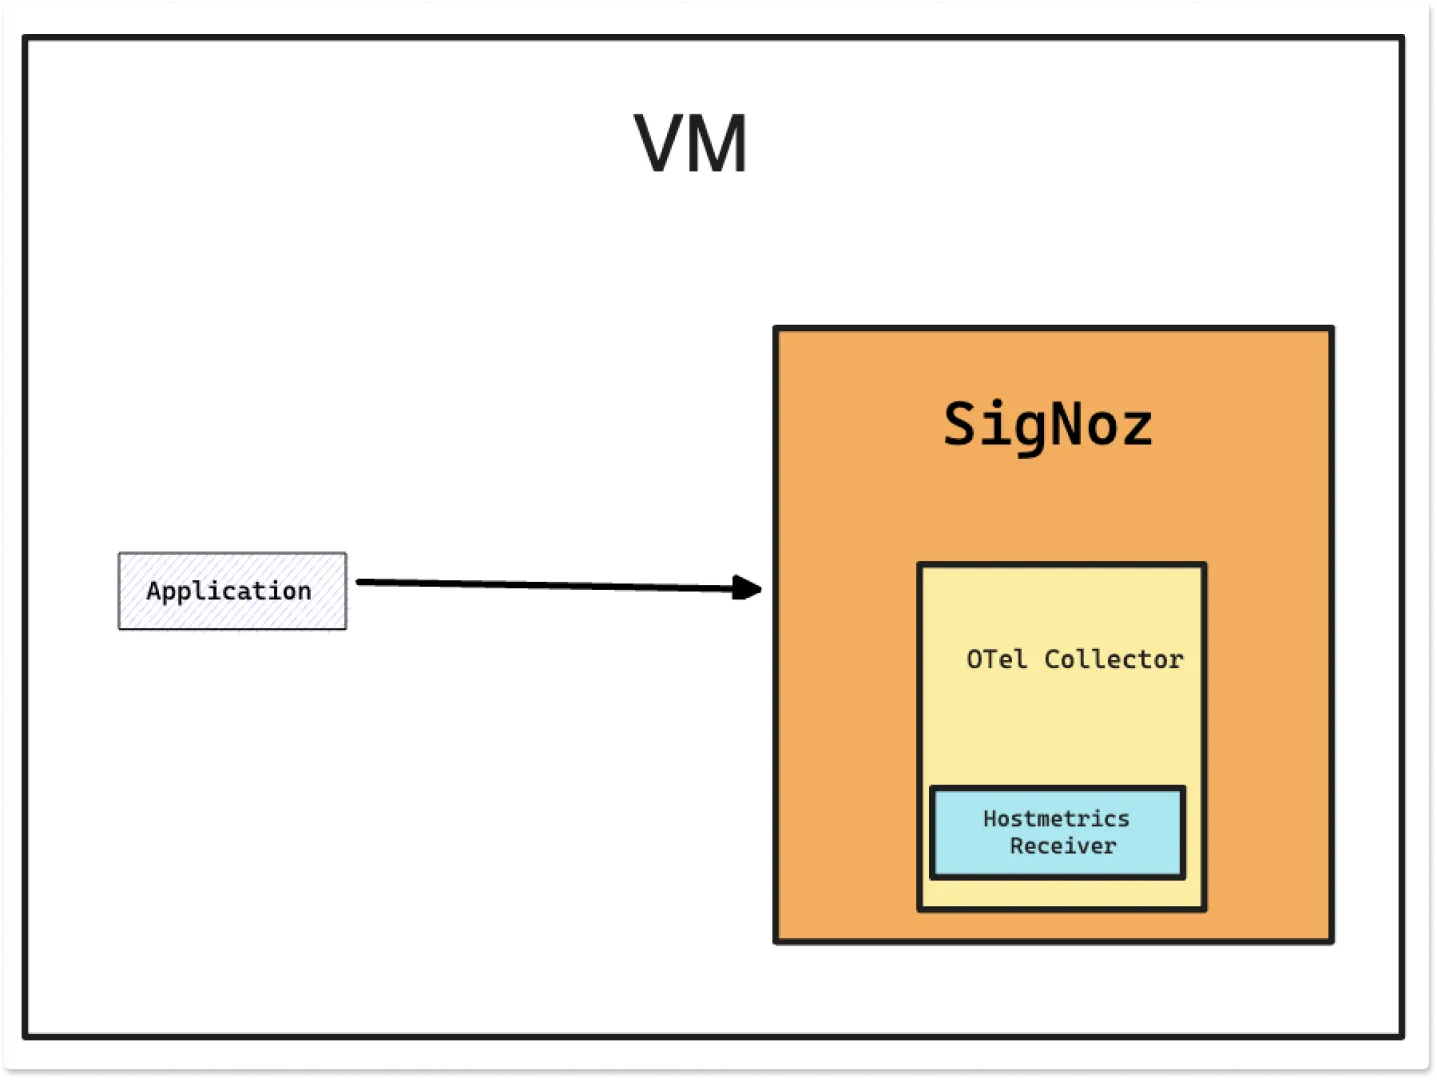 The HostMetrics collection process for Self-Host SigNoz on same VM